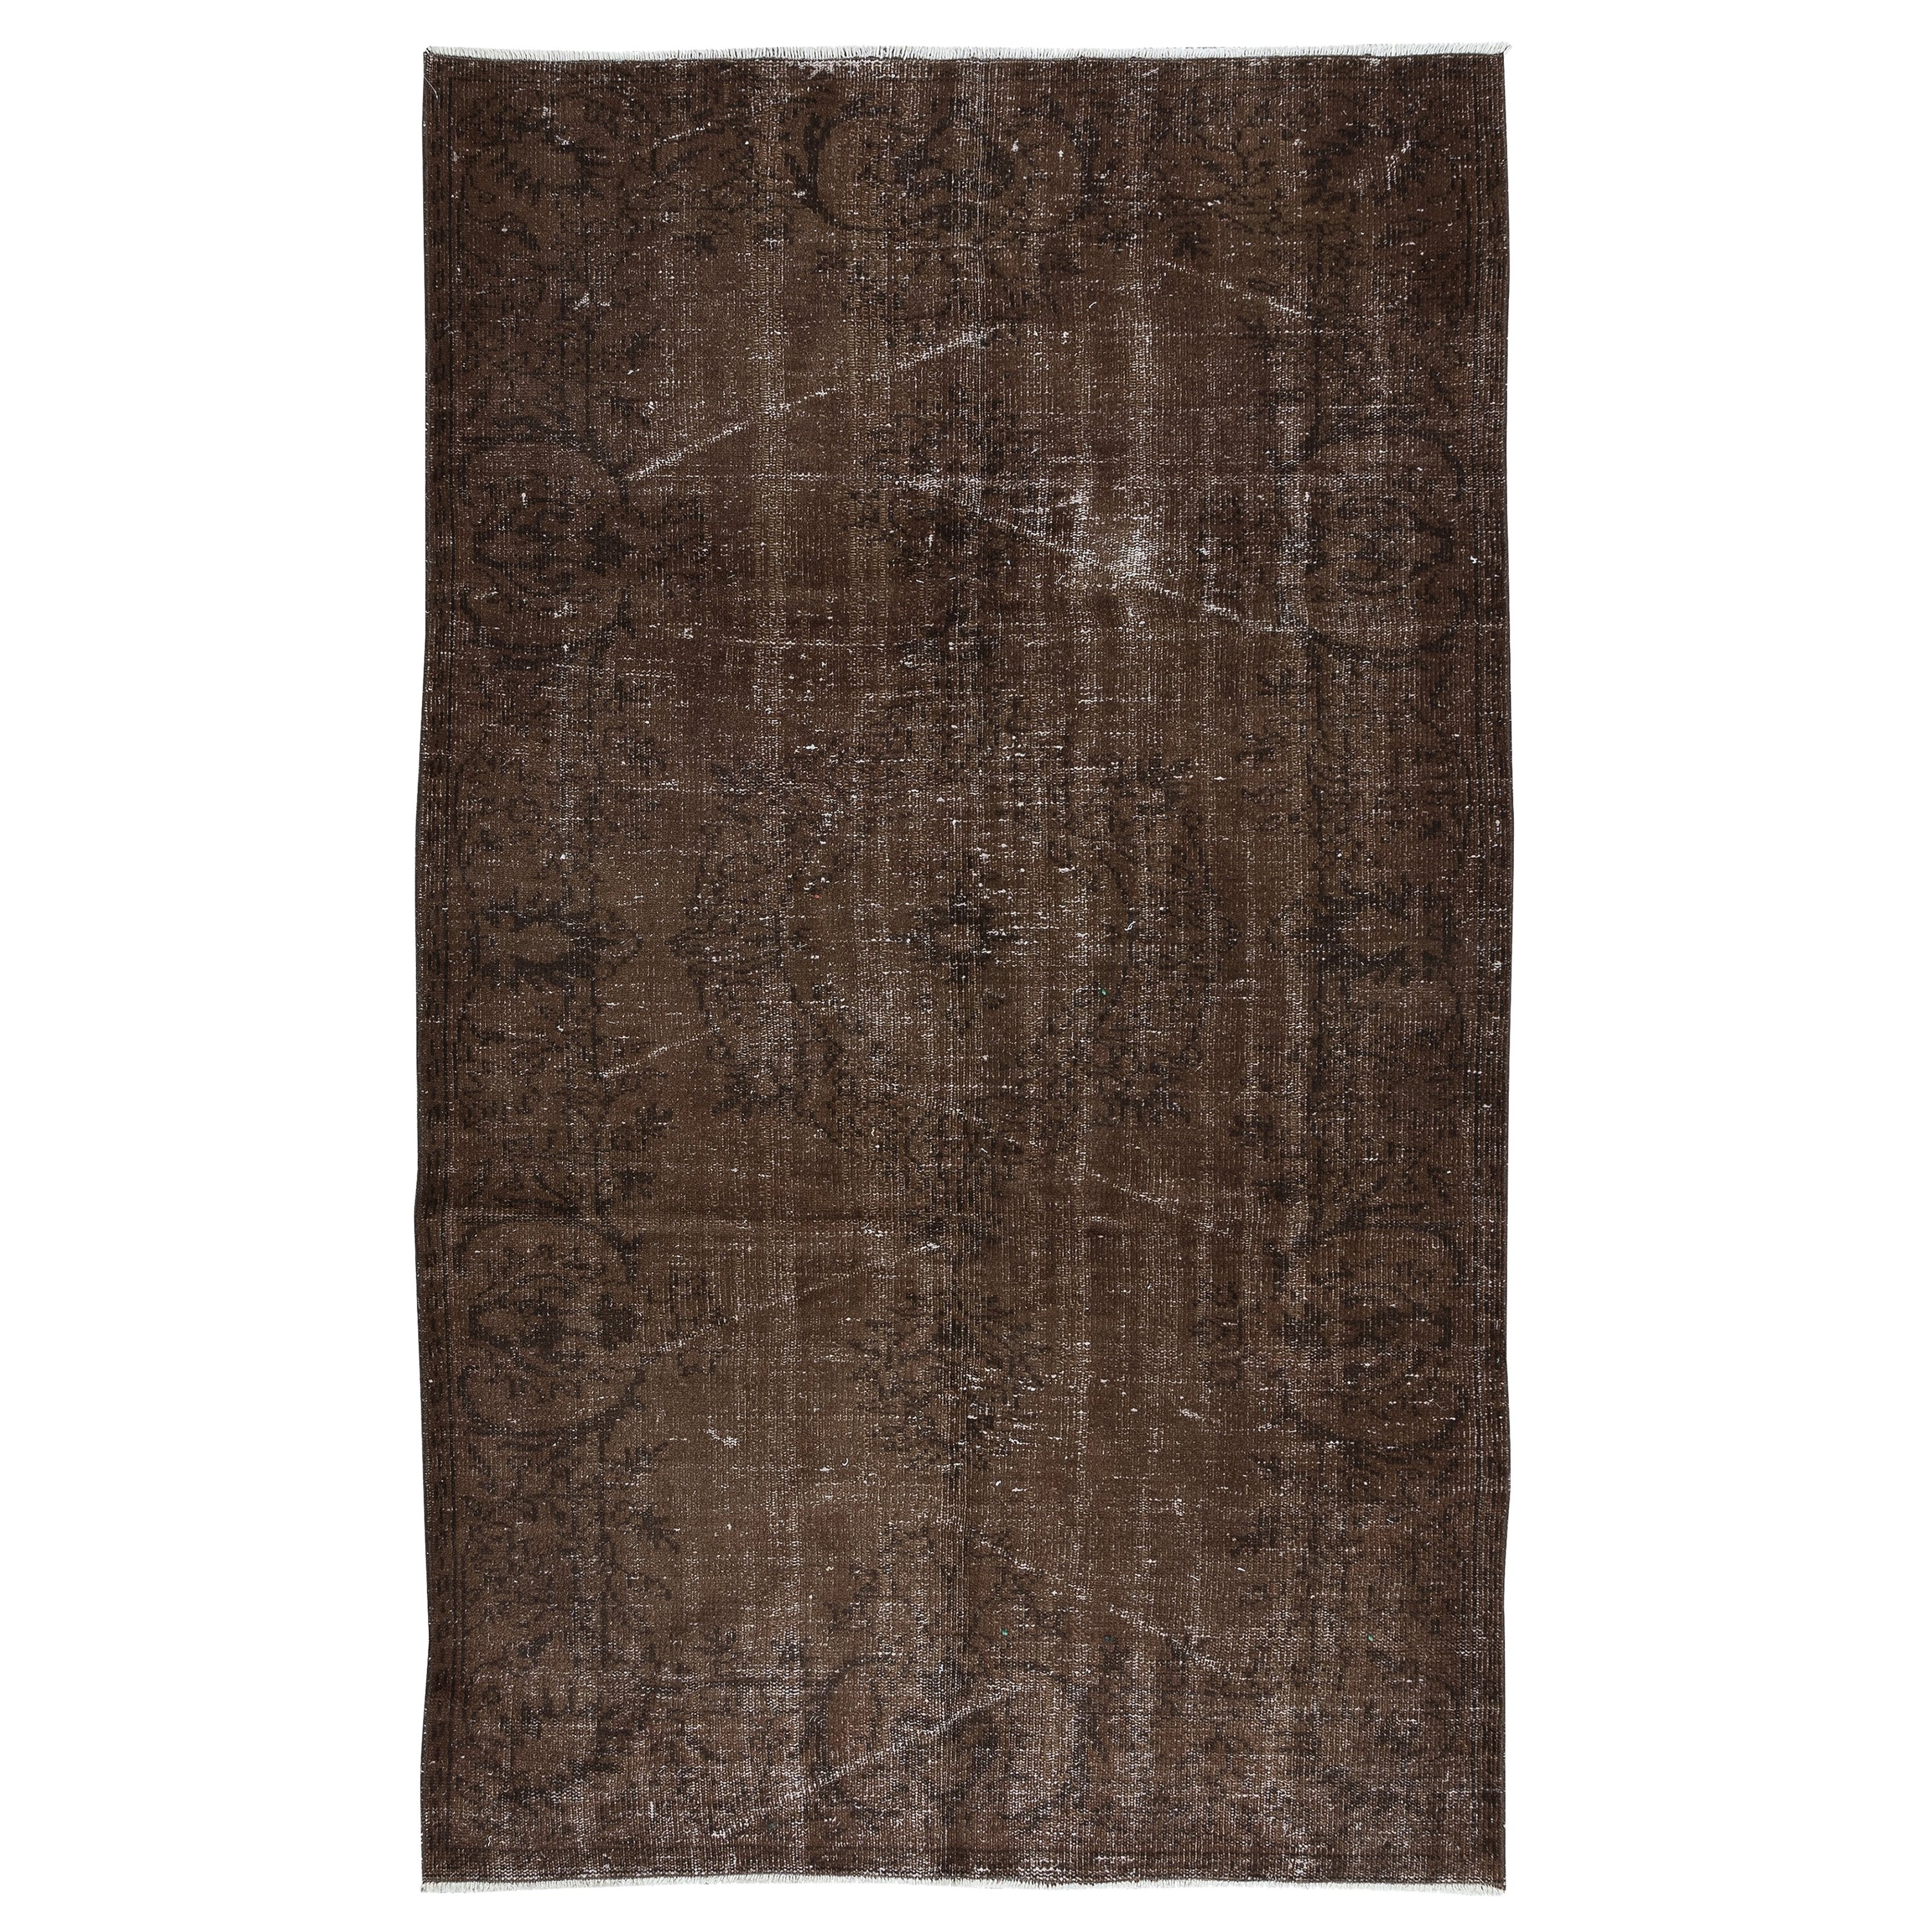 4.8x8 Ft Brown Distressed Look Handmade Rug, Modern Anatolian Shabby Chic Carpet